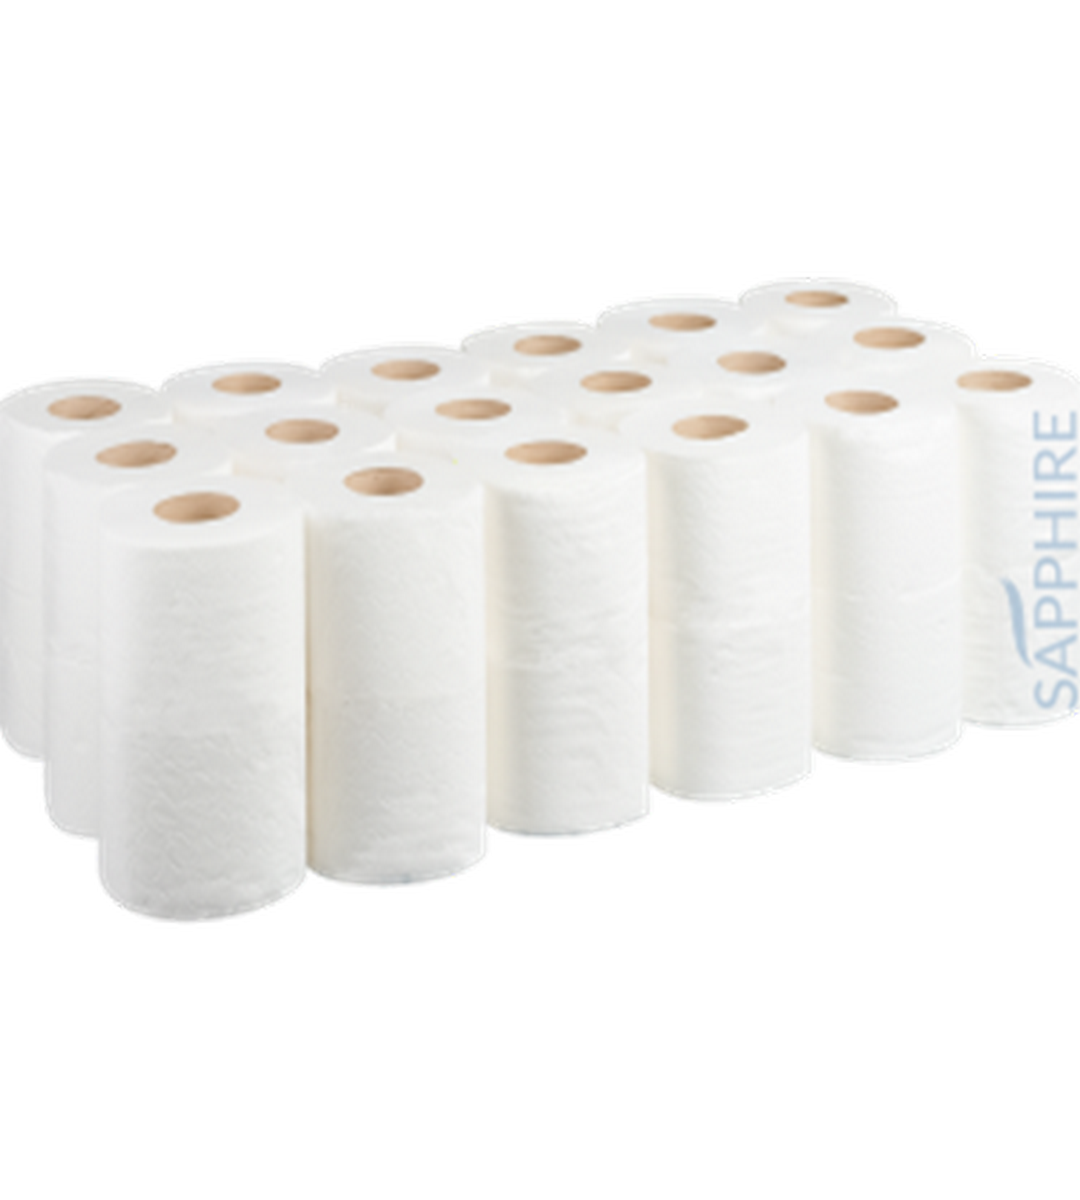 White Toilet Roll - Pack of 40 - Sealco Scotland